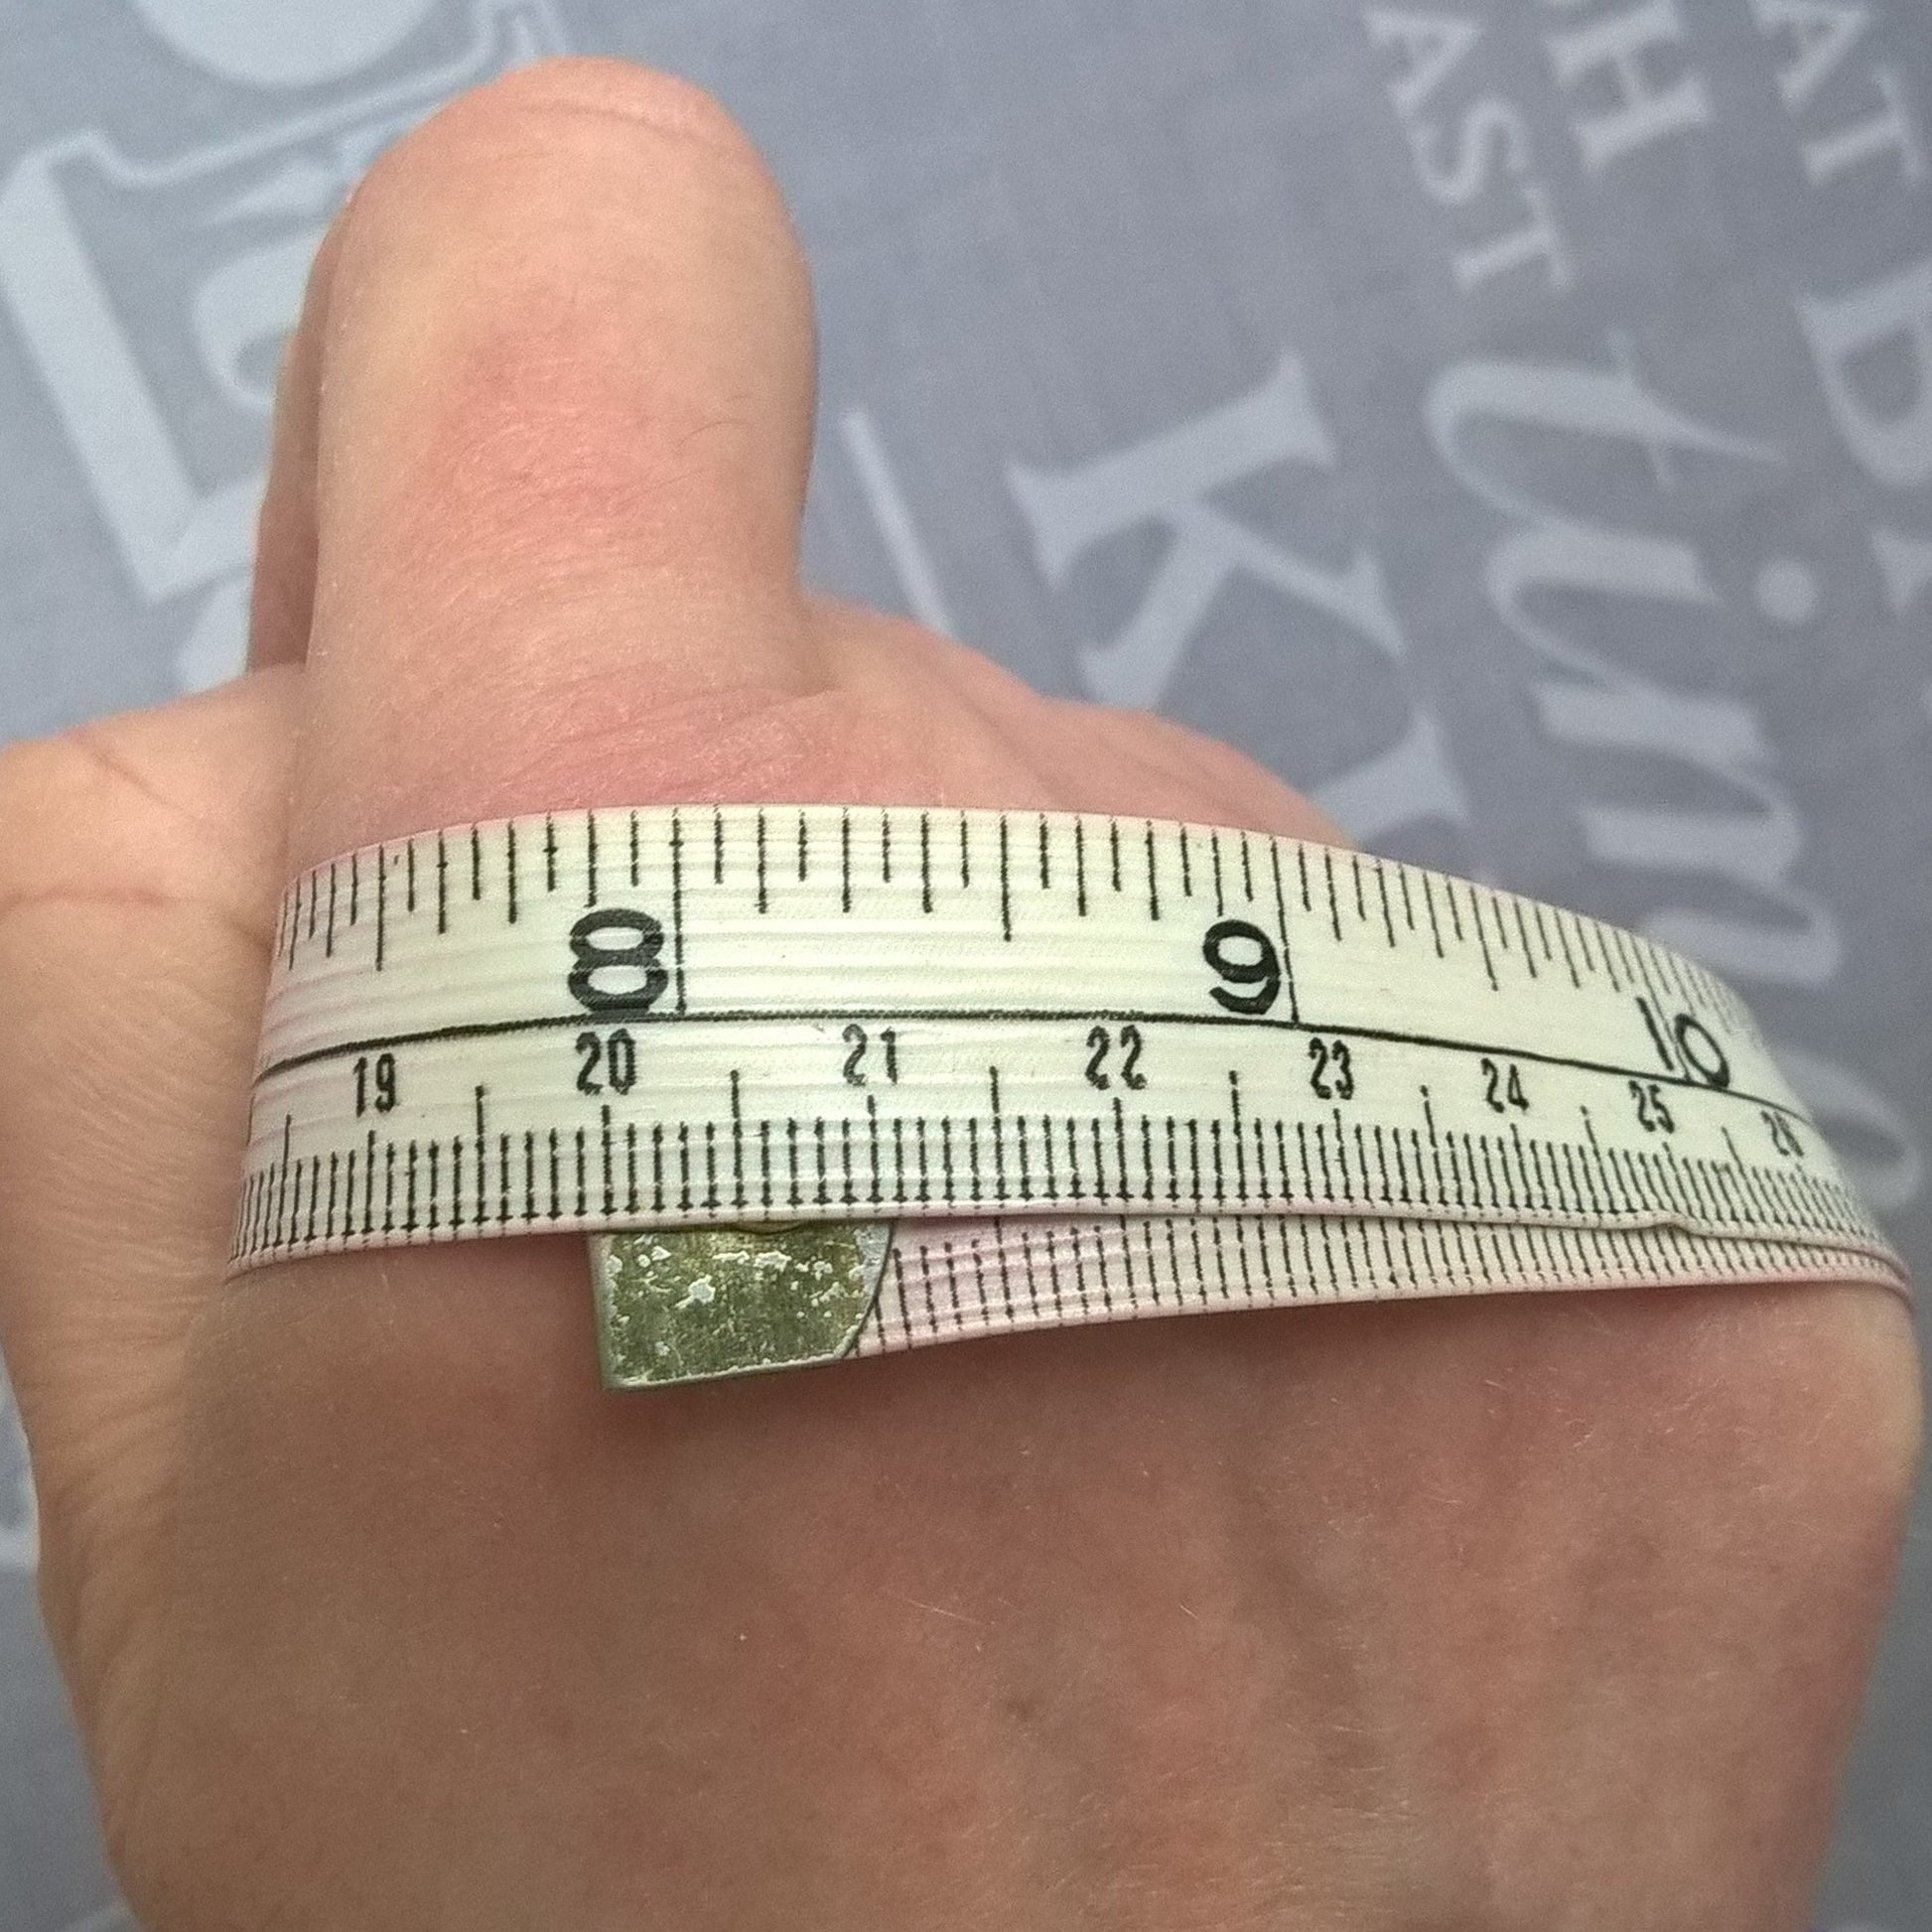 Measure around knuckles to determine size